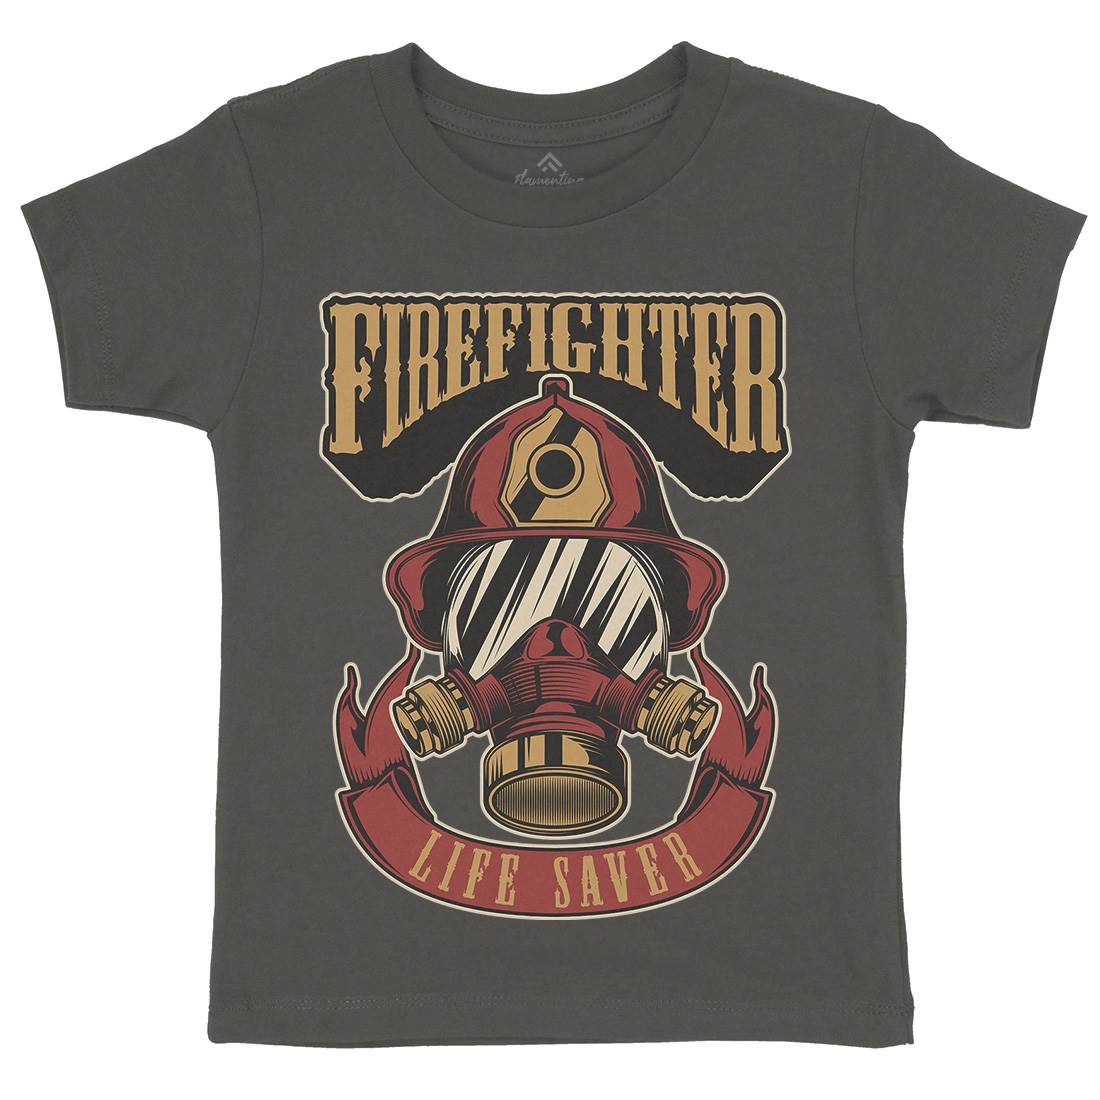 Life Saver Kids Crew Neck T-Shirt Firefighters C827